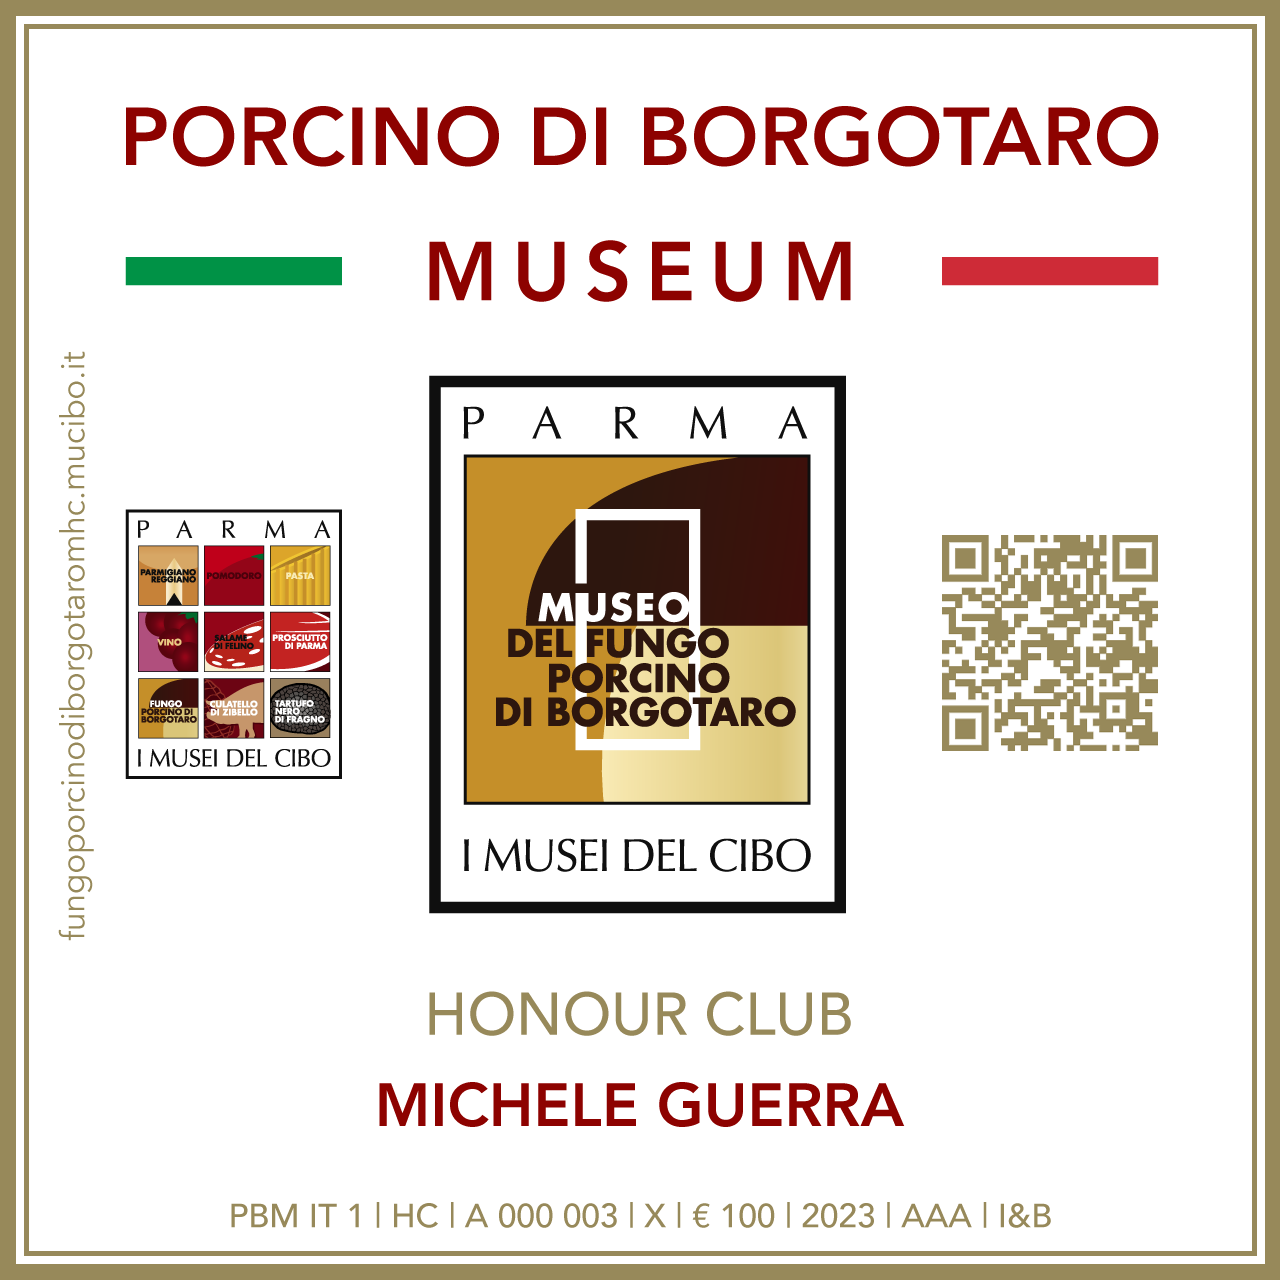 Fungo Porcino di Borgotaro Museum Honour Club - Token Id A 000 003 - MICHELE GUERRA